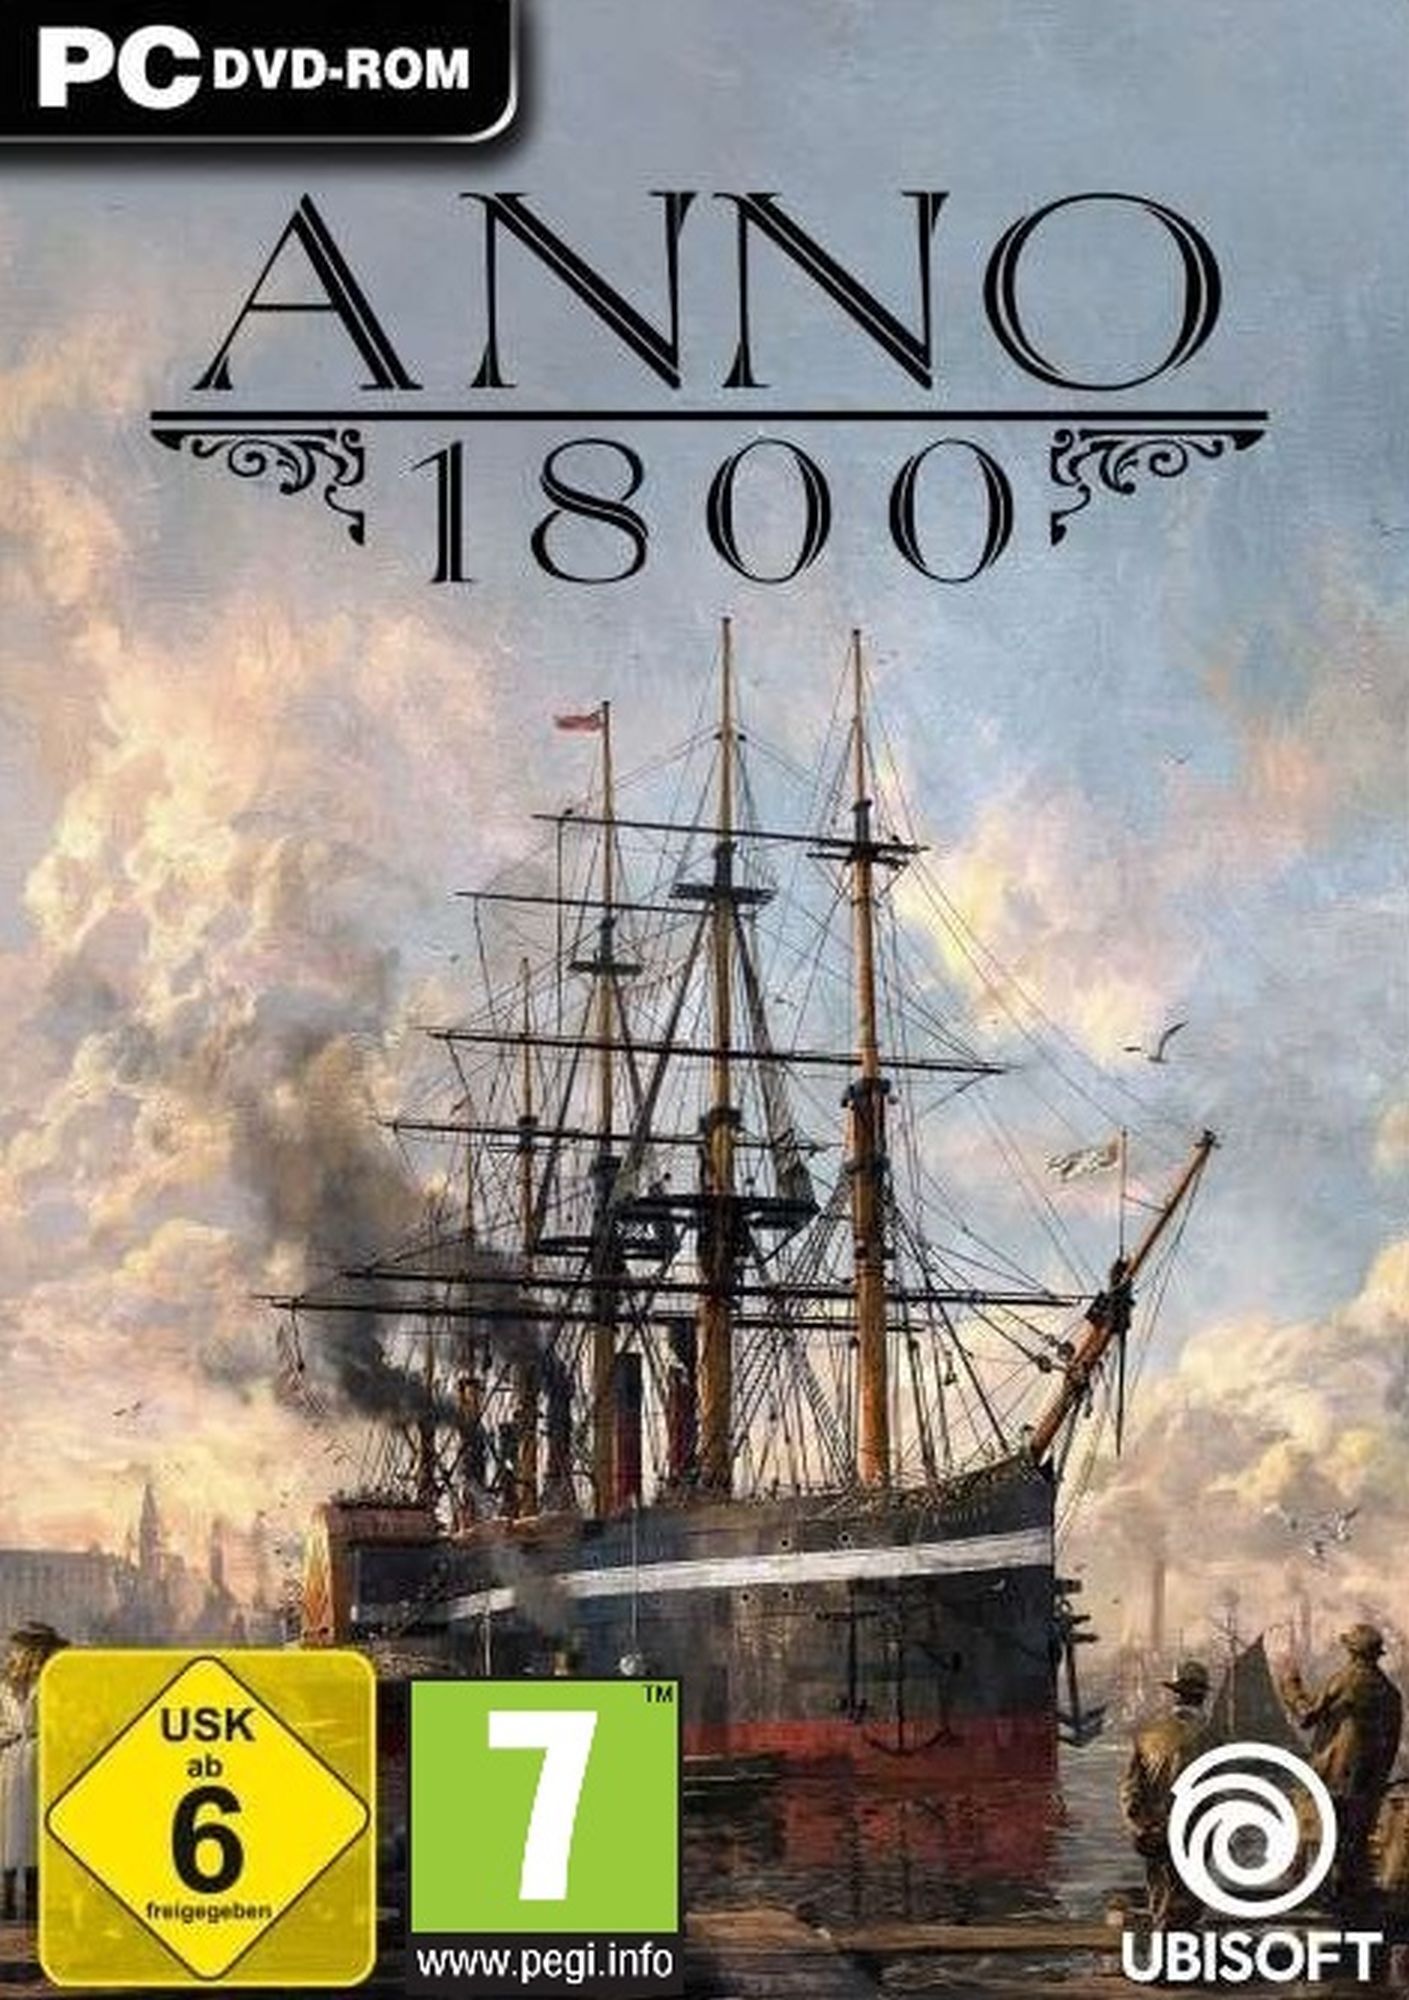 Ubisoft - Anno 1800 [DVD] [PC] (D)